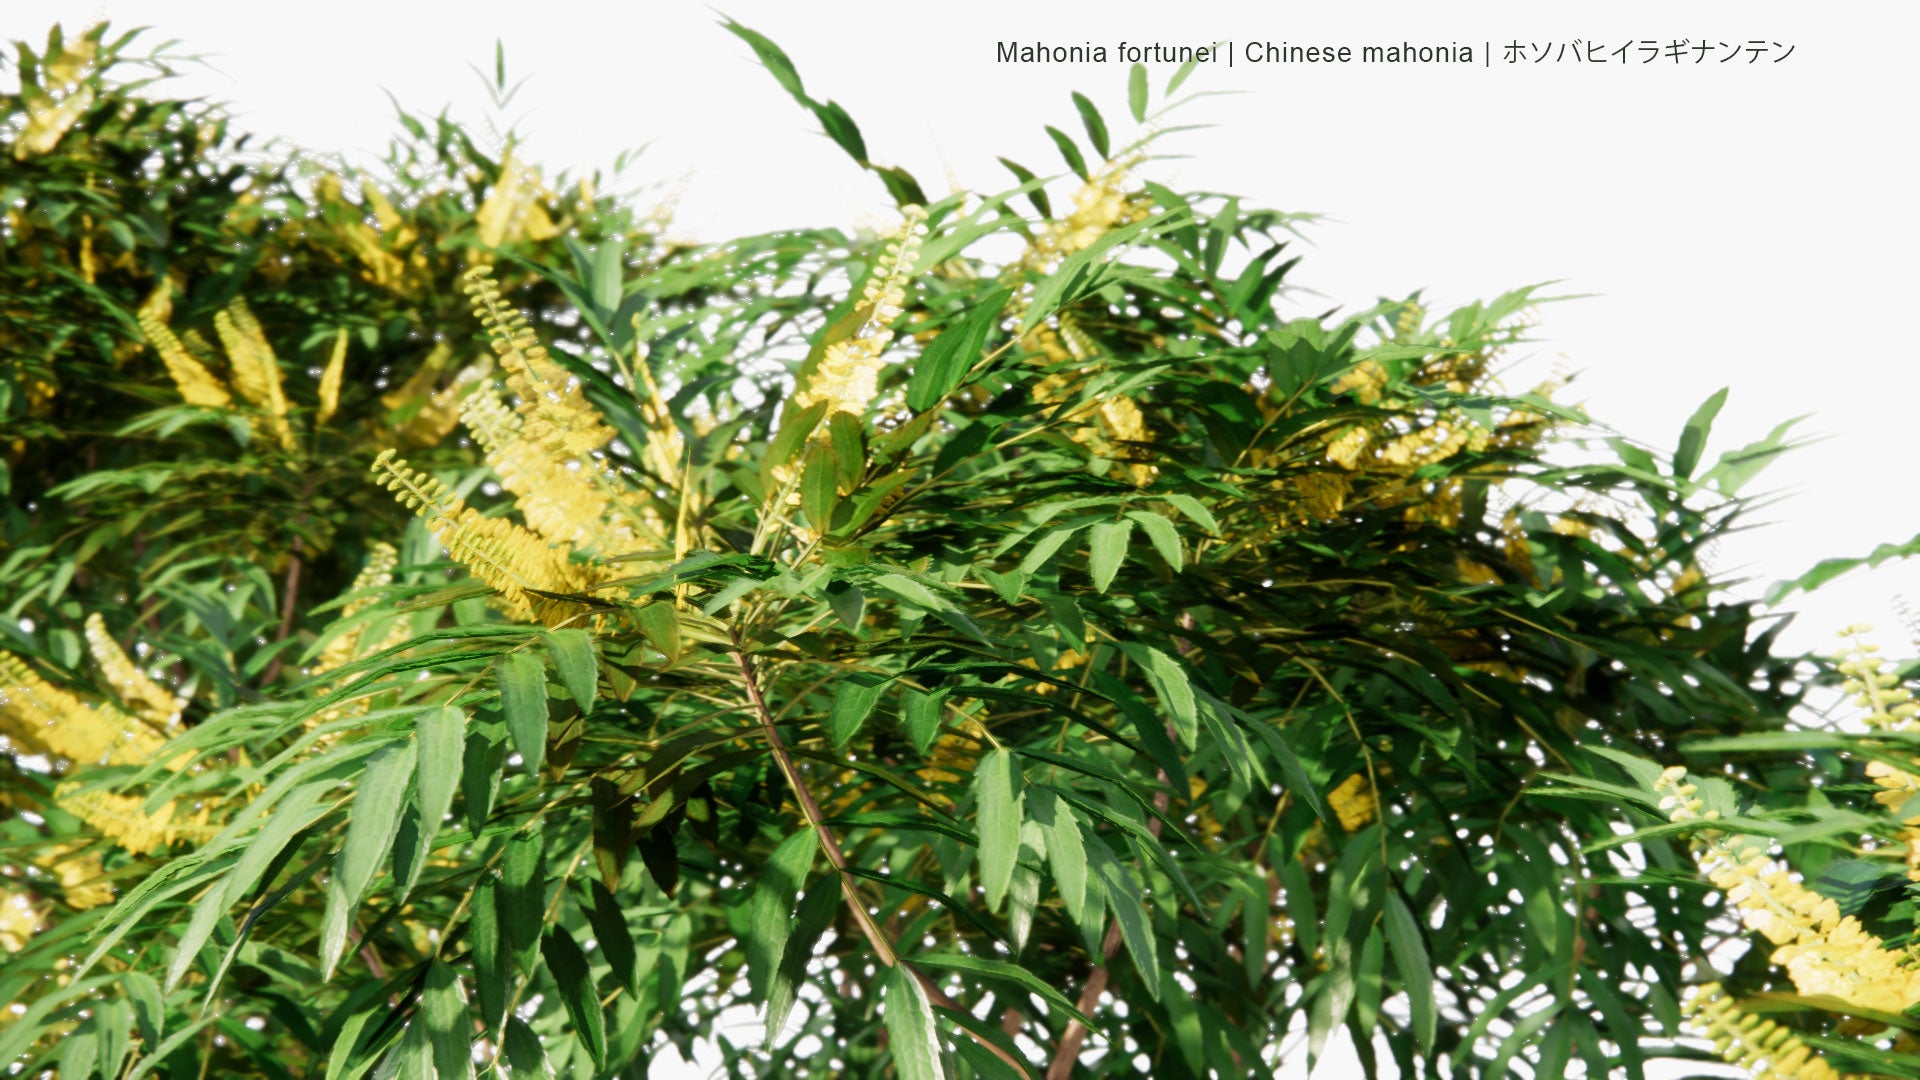 Low Poly Mahonia Fortunei - Chinese Mahonia, ホソバヒイラギナンテン (3D Model)